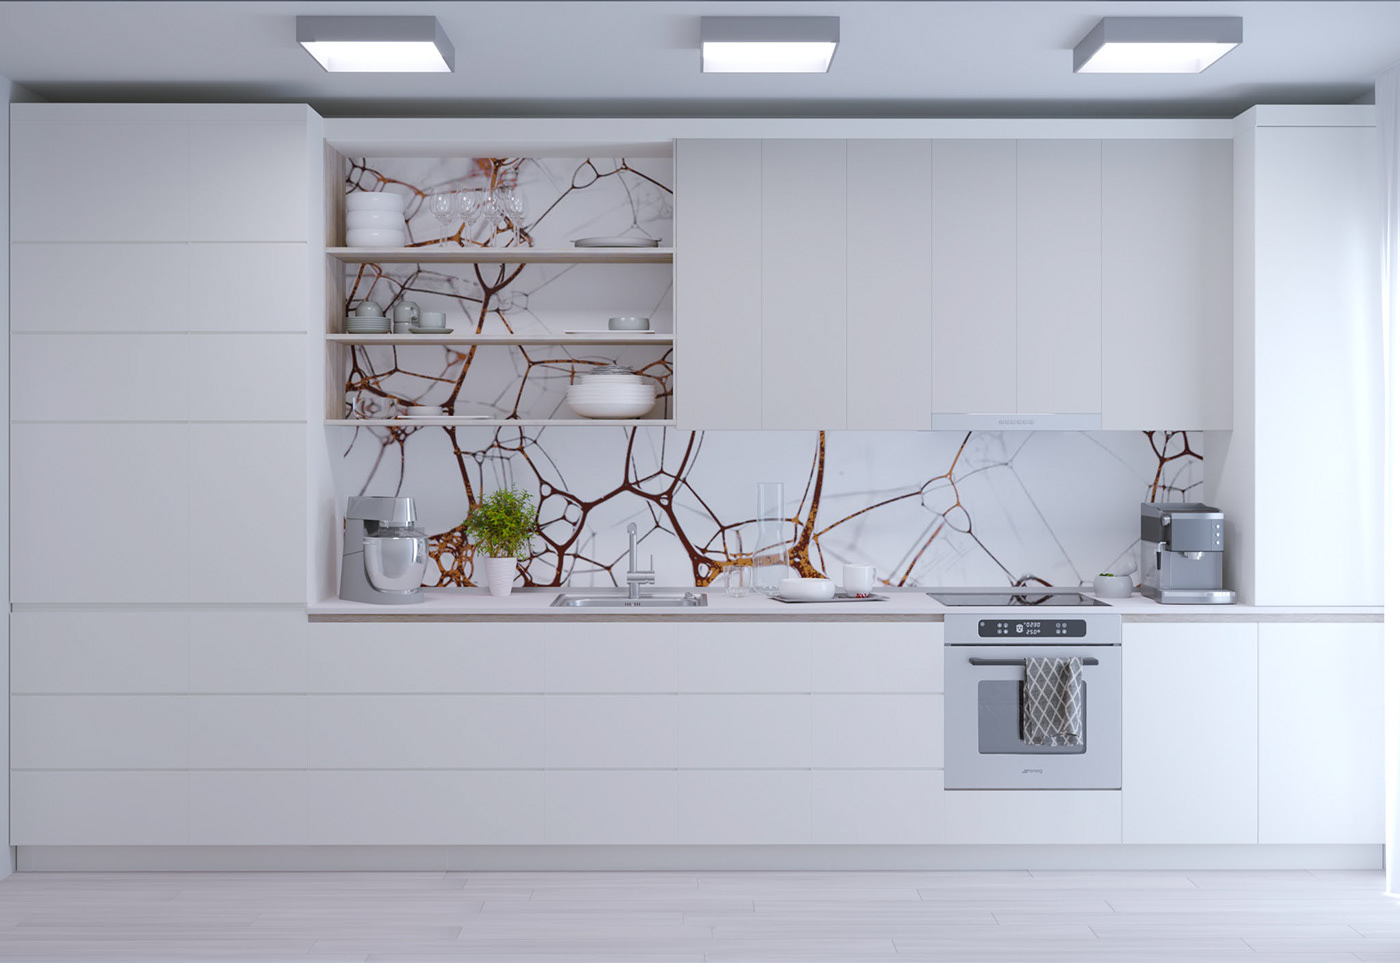 3dsmax CGI coronarenderer epoxy interiordesign kitchen lightcolors NeuralNetwork smallkitchen